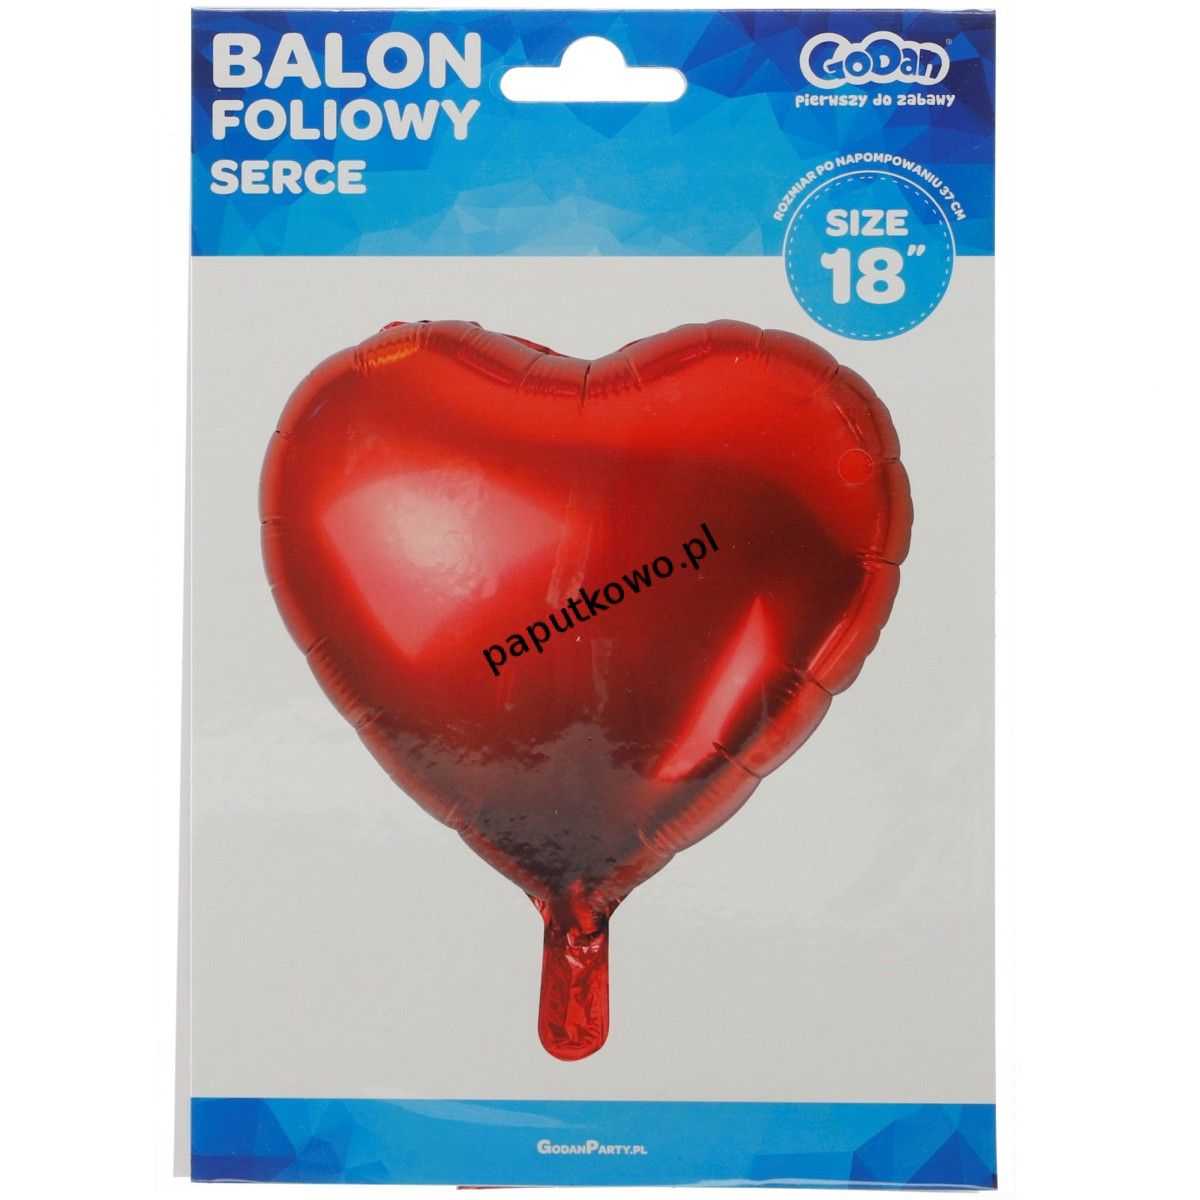 Balon foliowy Godan serce czerwone 18 cali 18cal (hs-s18cw) 1